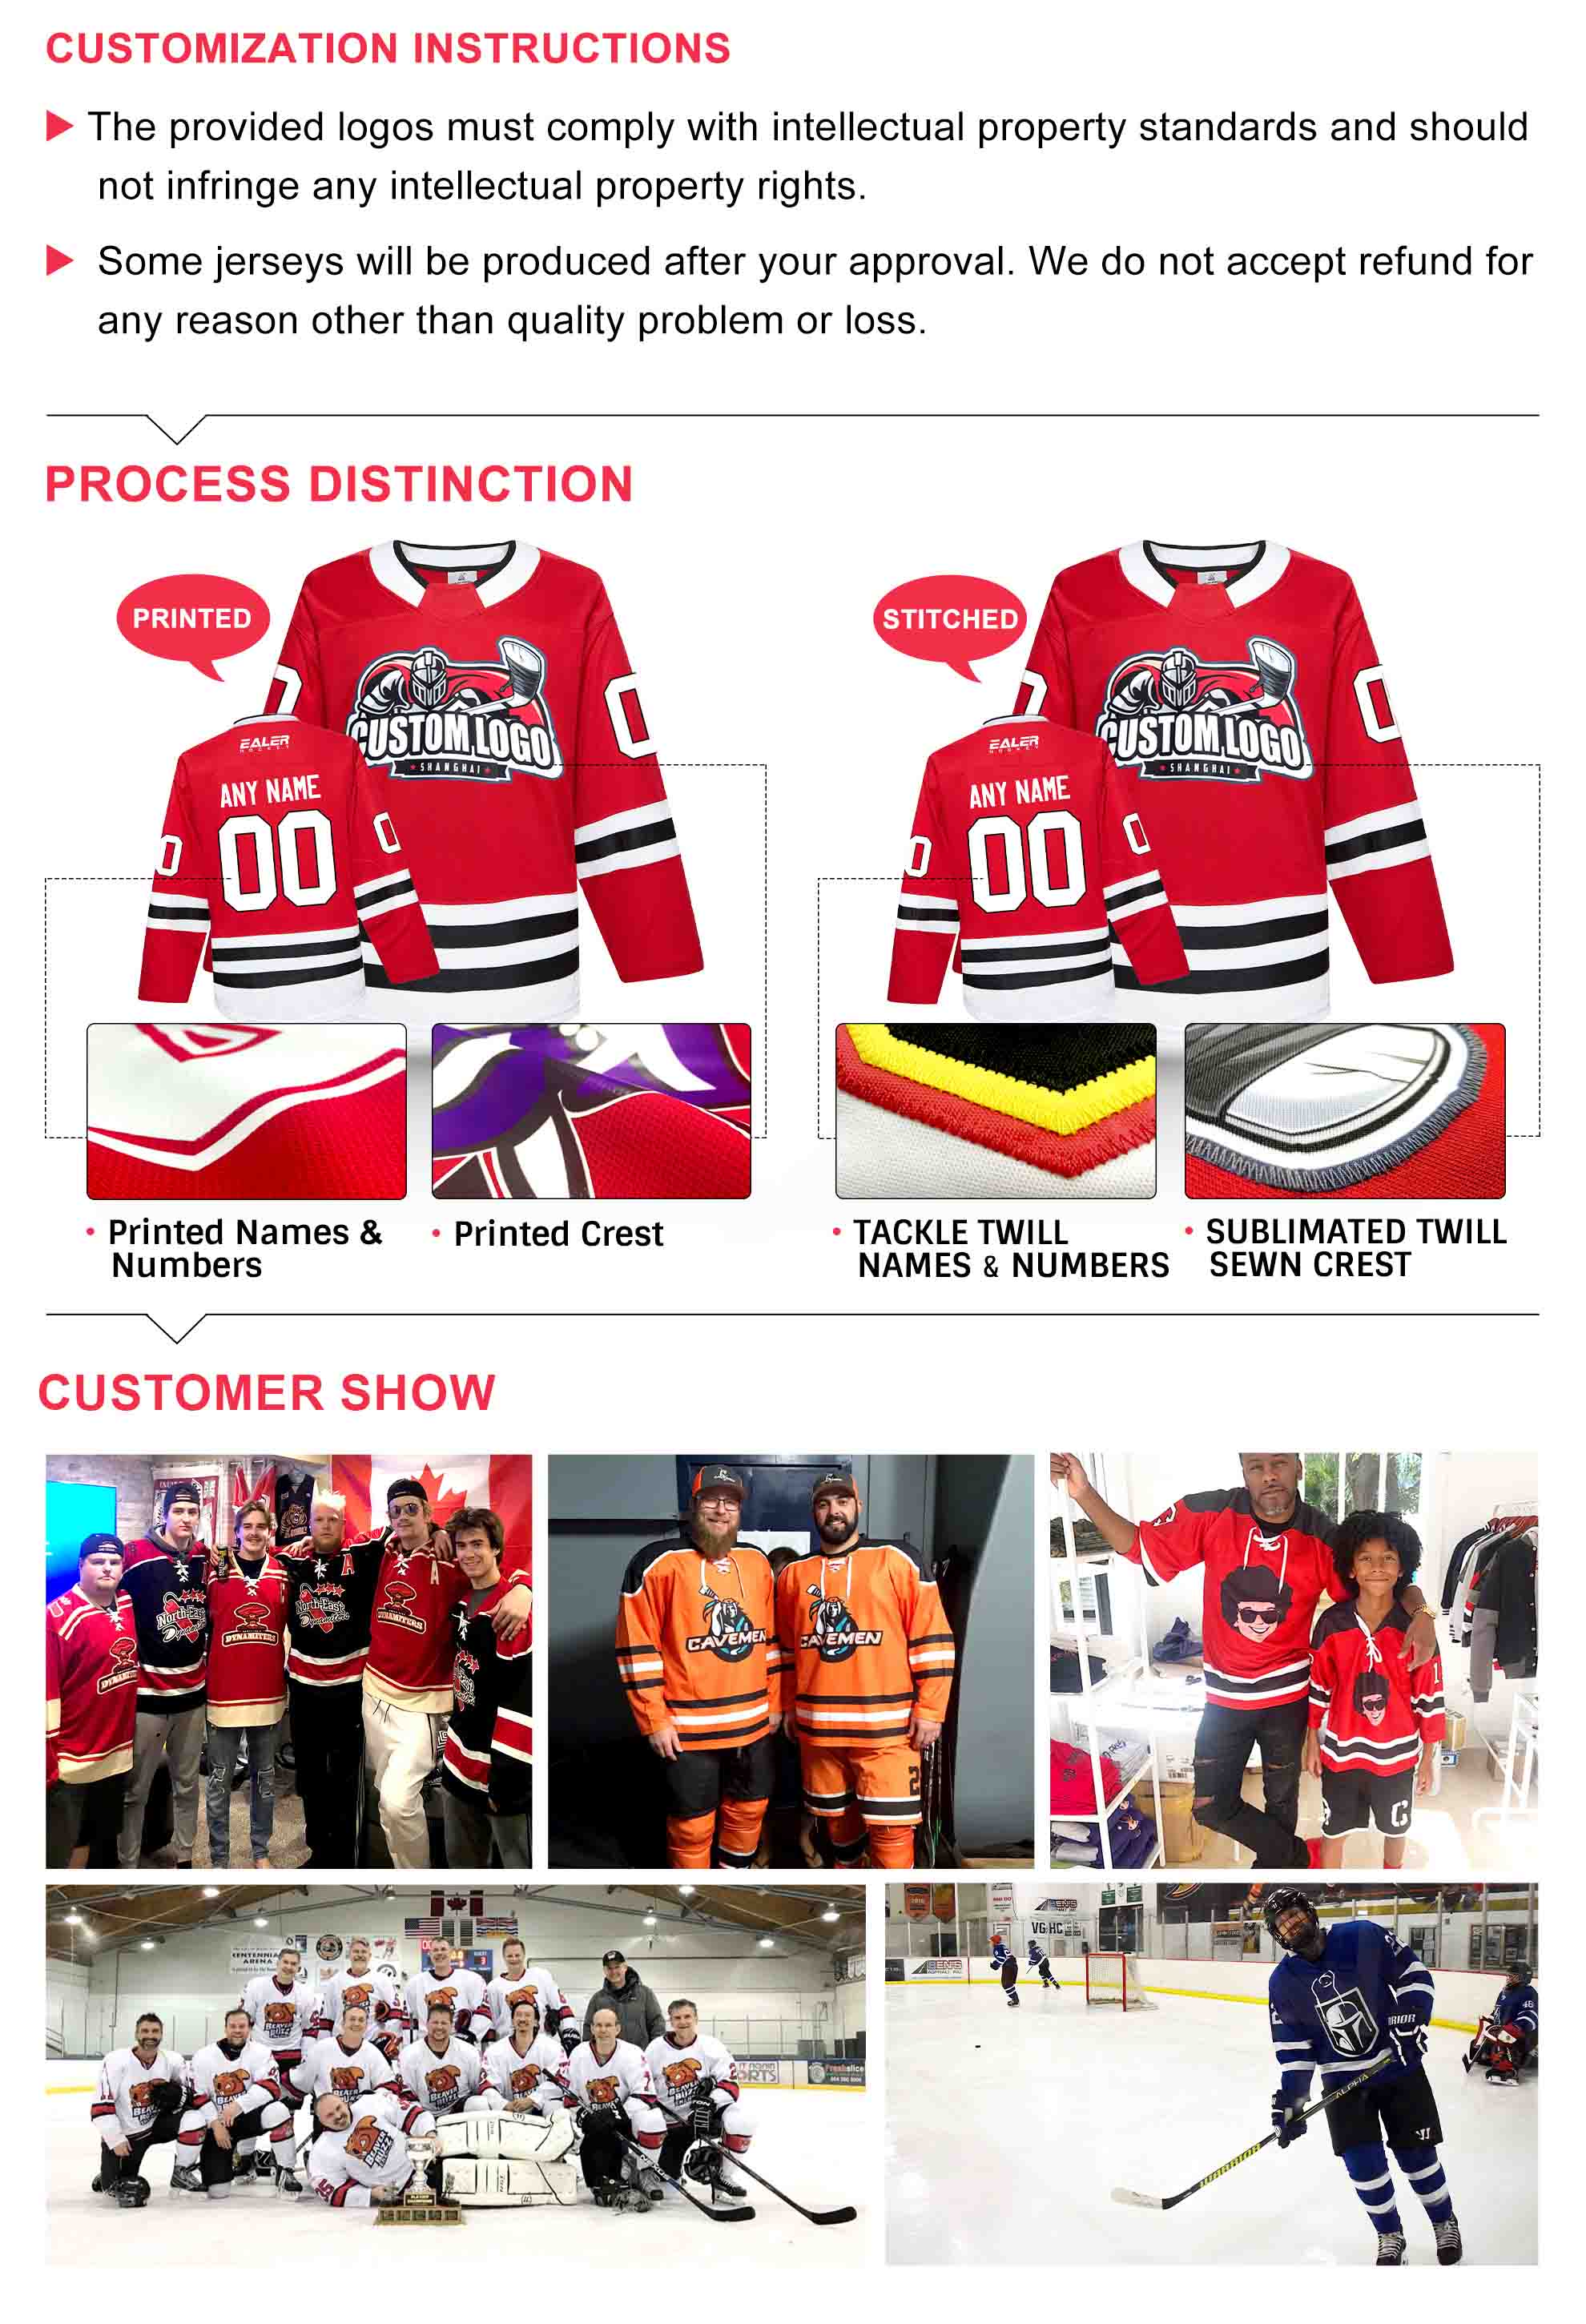 Mantheme Ice Hockey Jerseys, Custom Logo, Name, Number, Goalie Tender Size Please Choose 6XL, Plain Jerseys